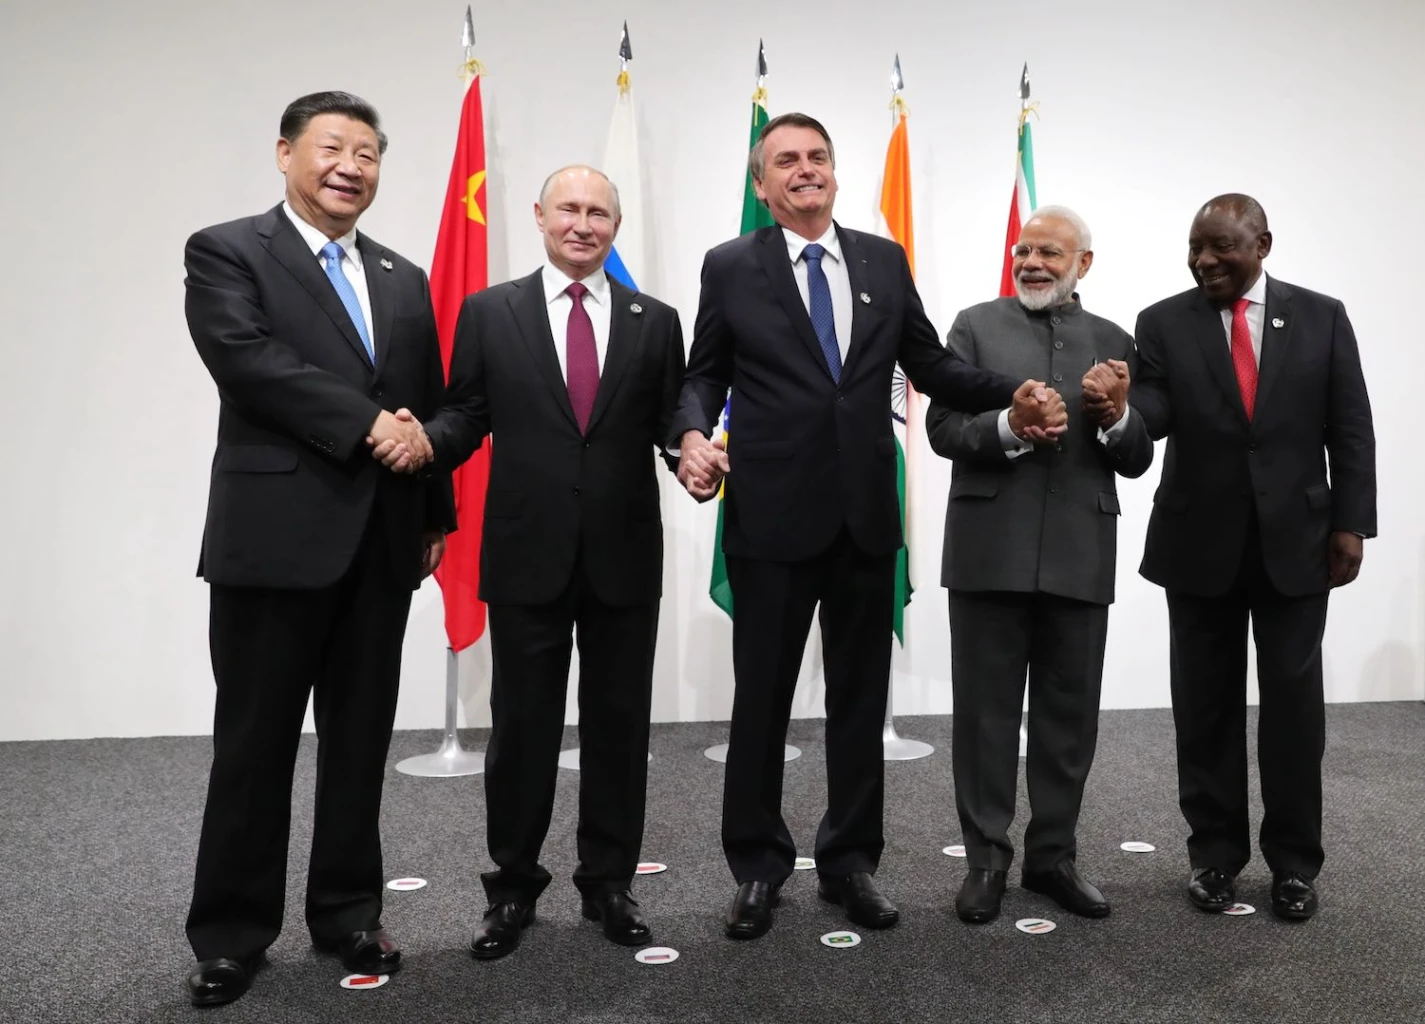 India blocks participation of Pakistan in BRICS High-level Dialogue on Global Development